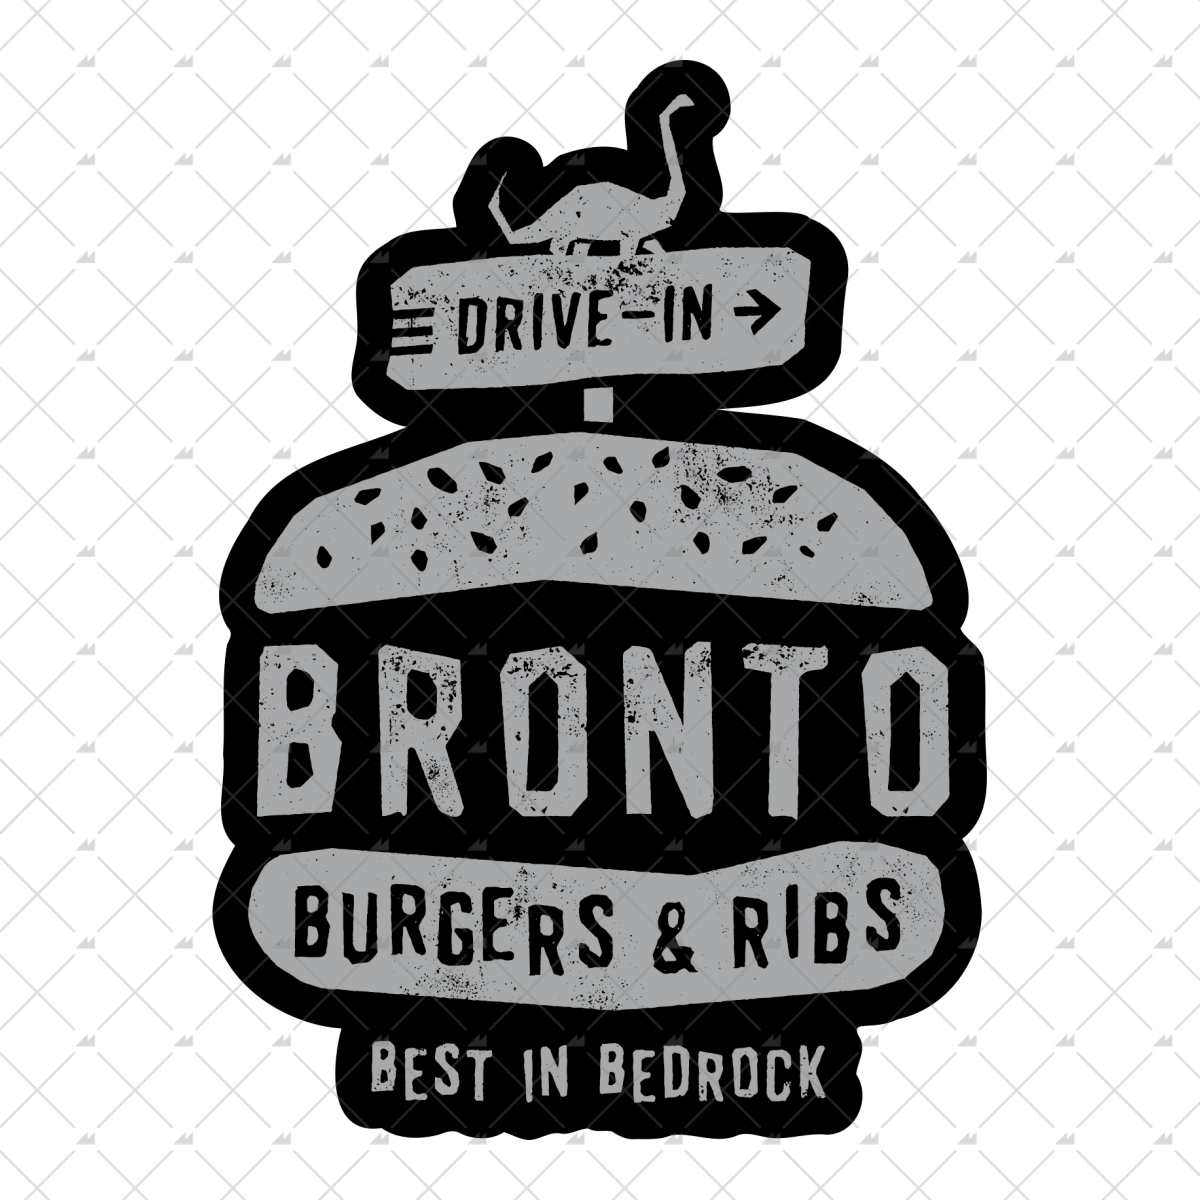 Bronto Burgers & Ribs - Sticker